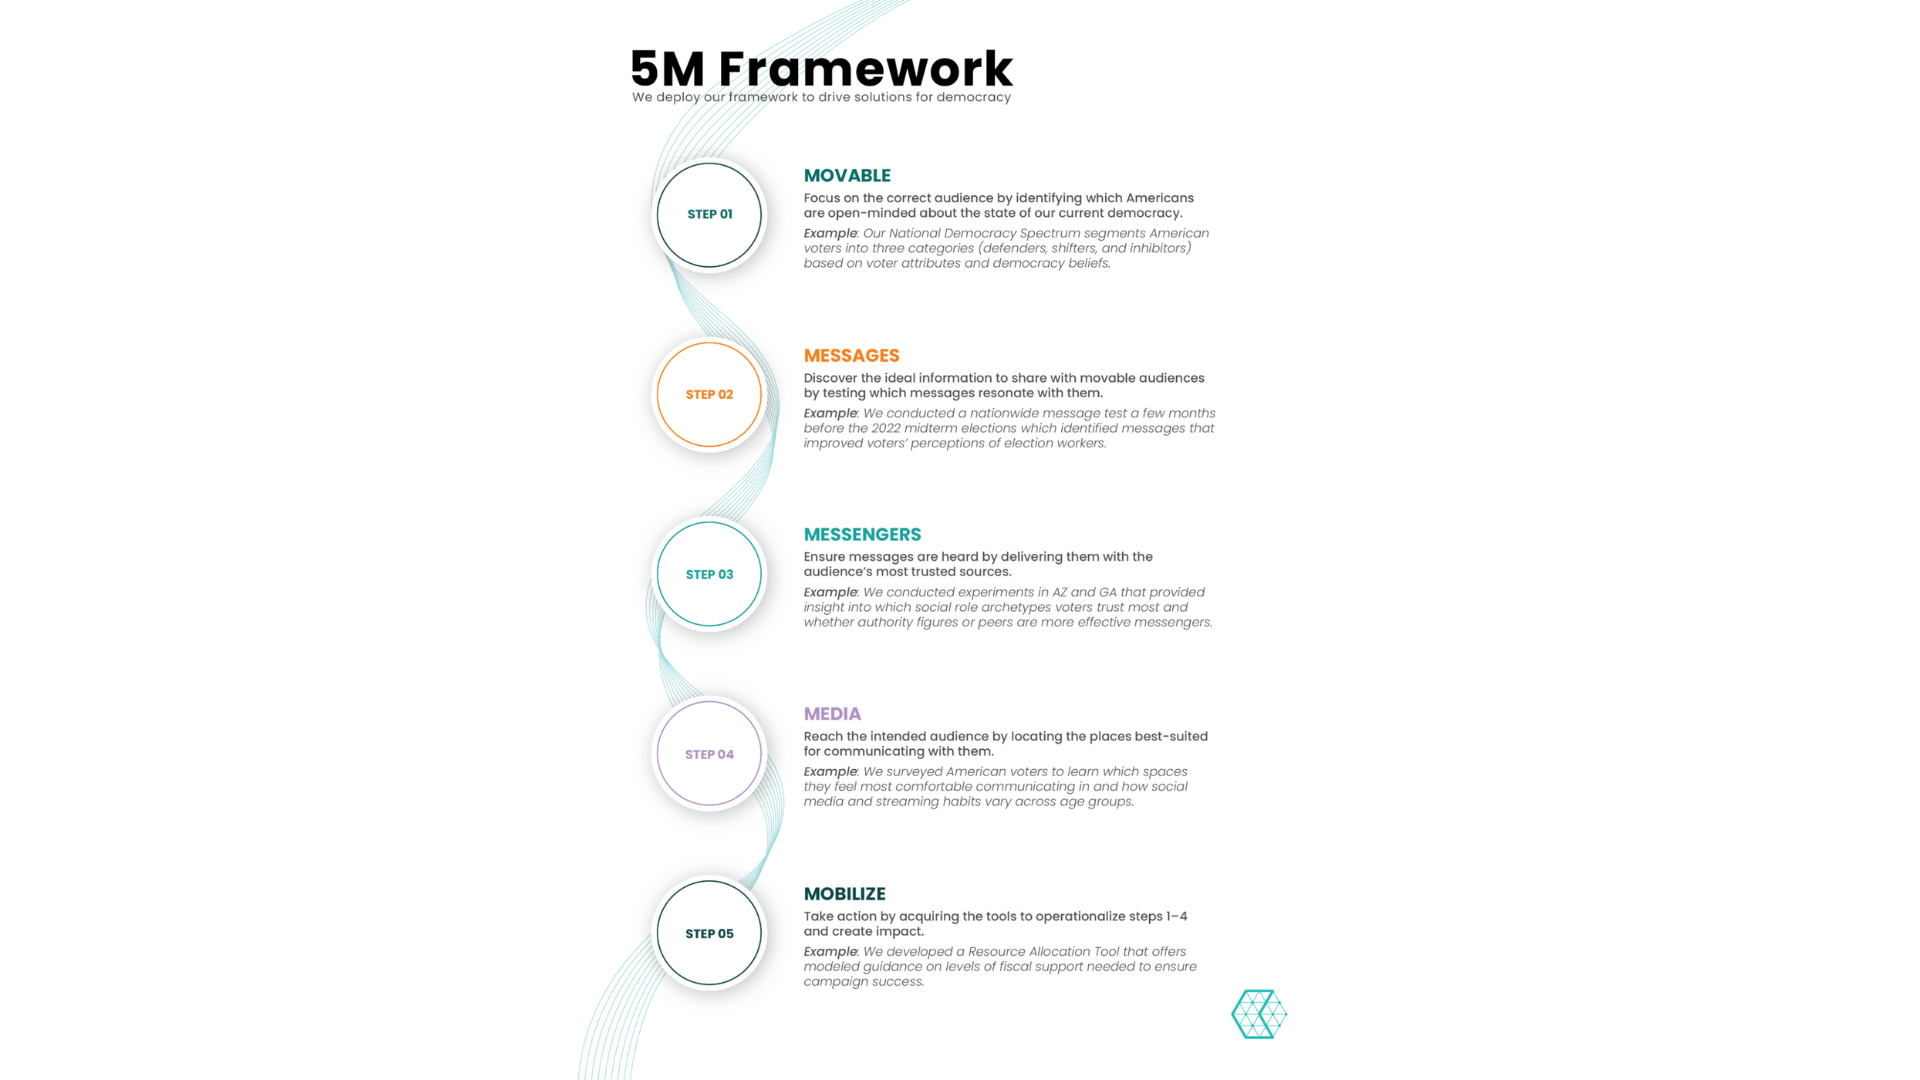 The 5M Framework